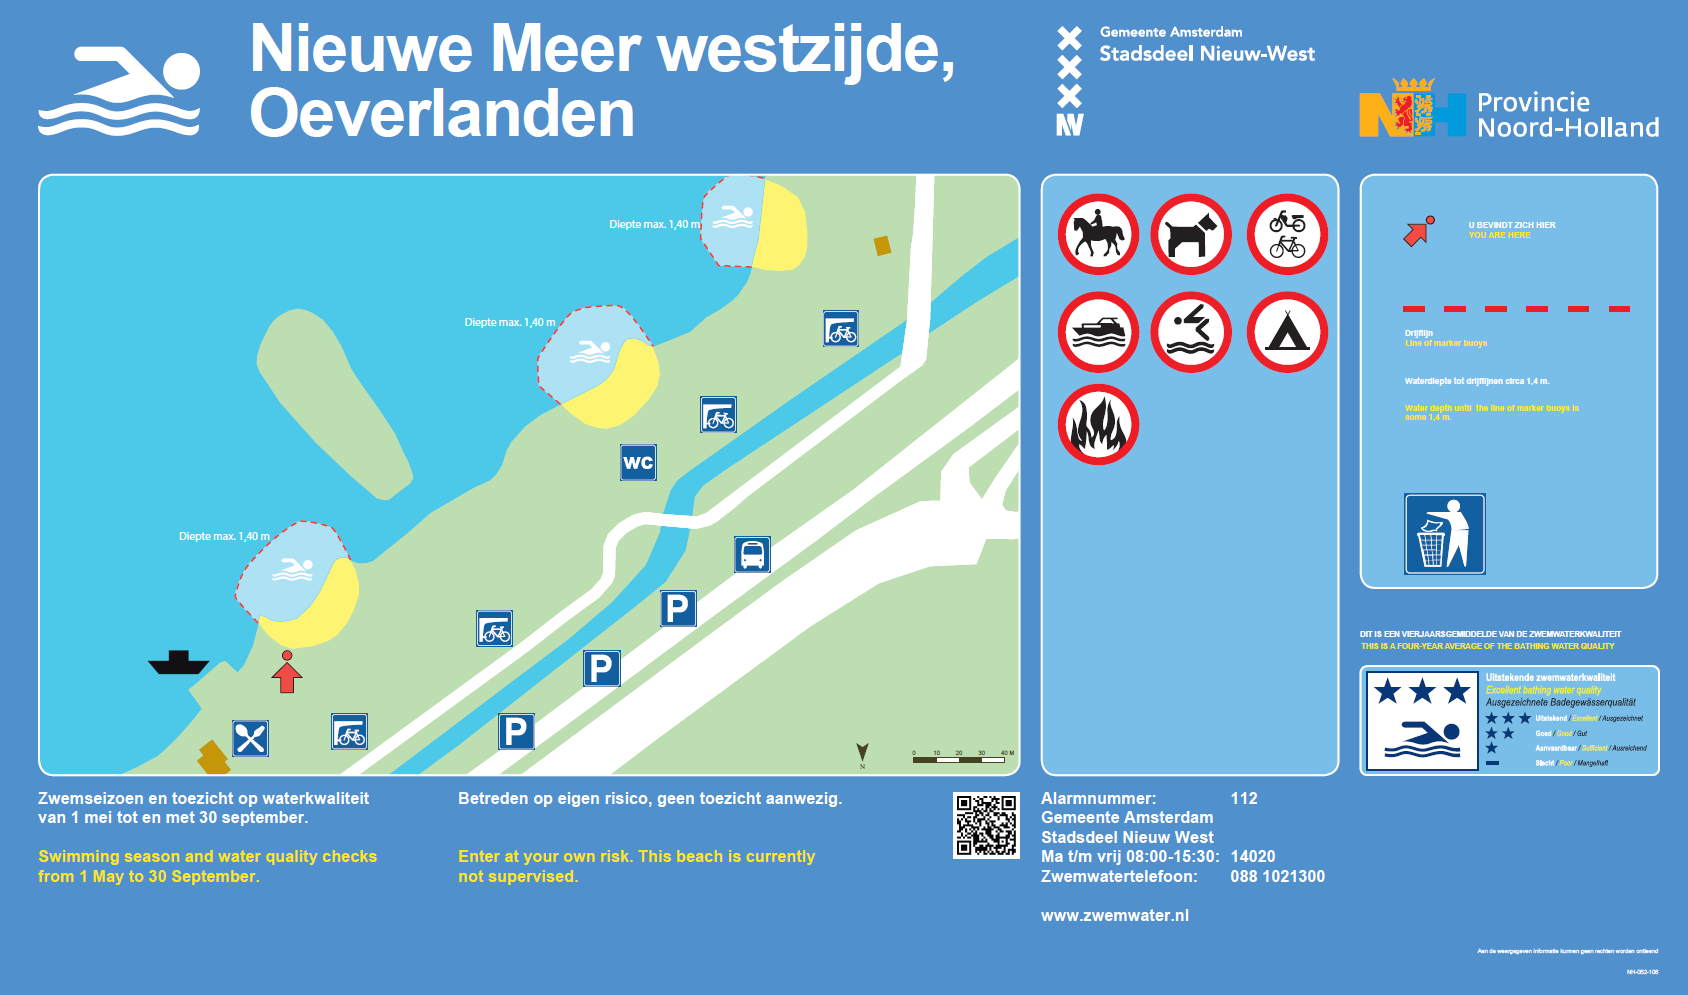 The information board at the swimming location Nieuwe Meer Westzijde, Oeverlanden